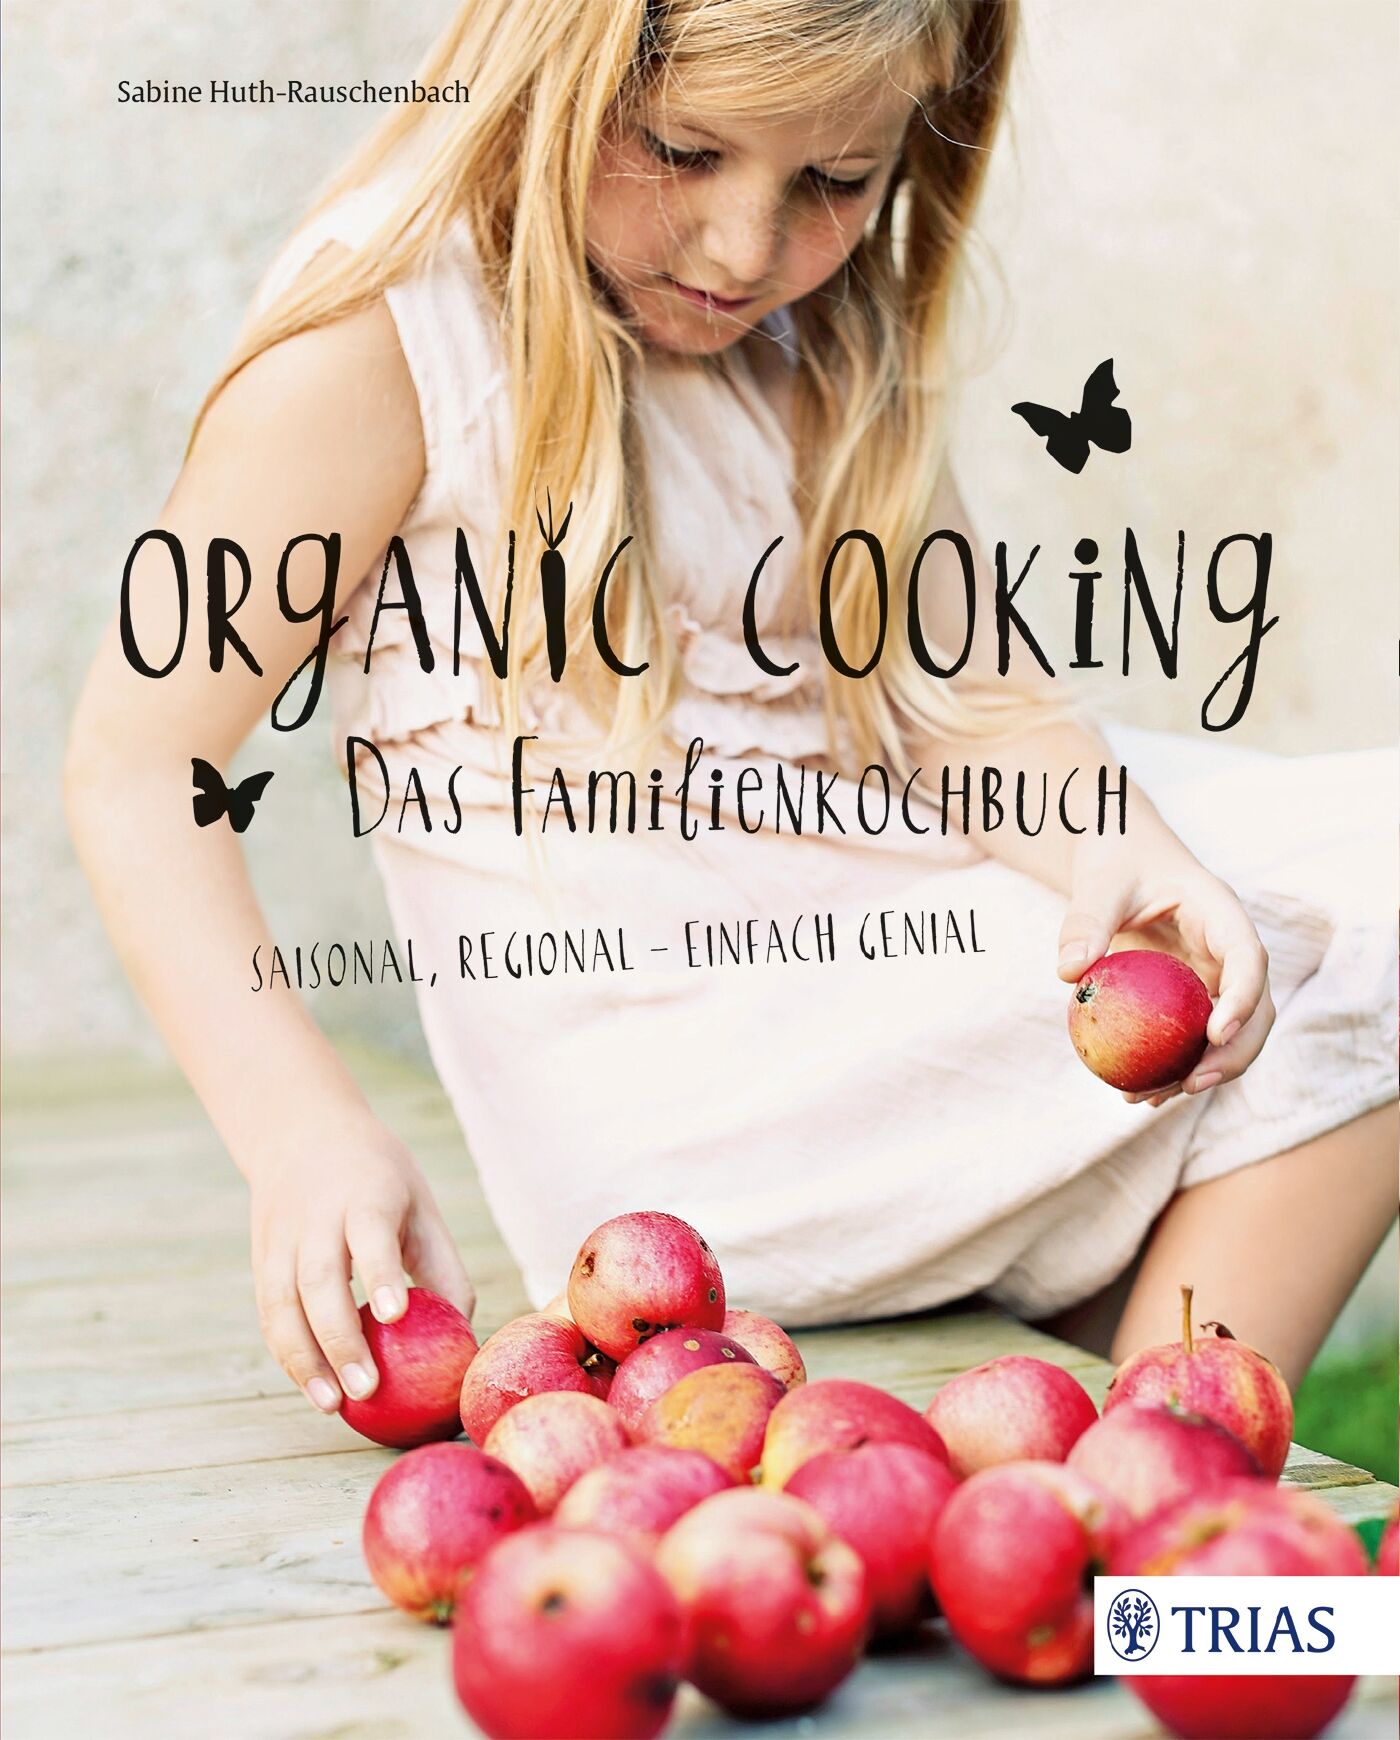 Organic Cooking - Das Familienkochbuch, 9783830480495